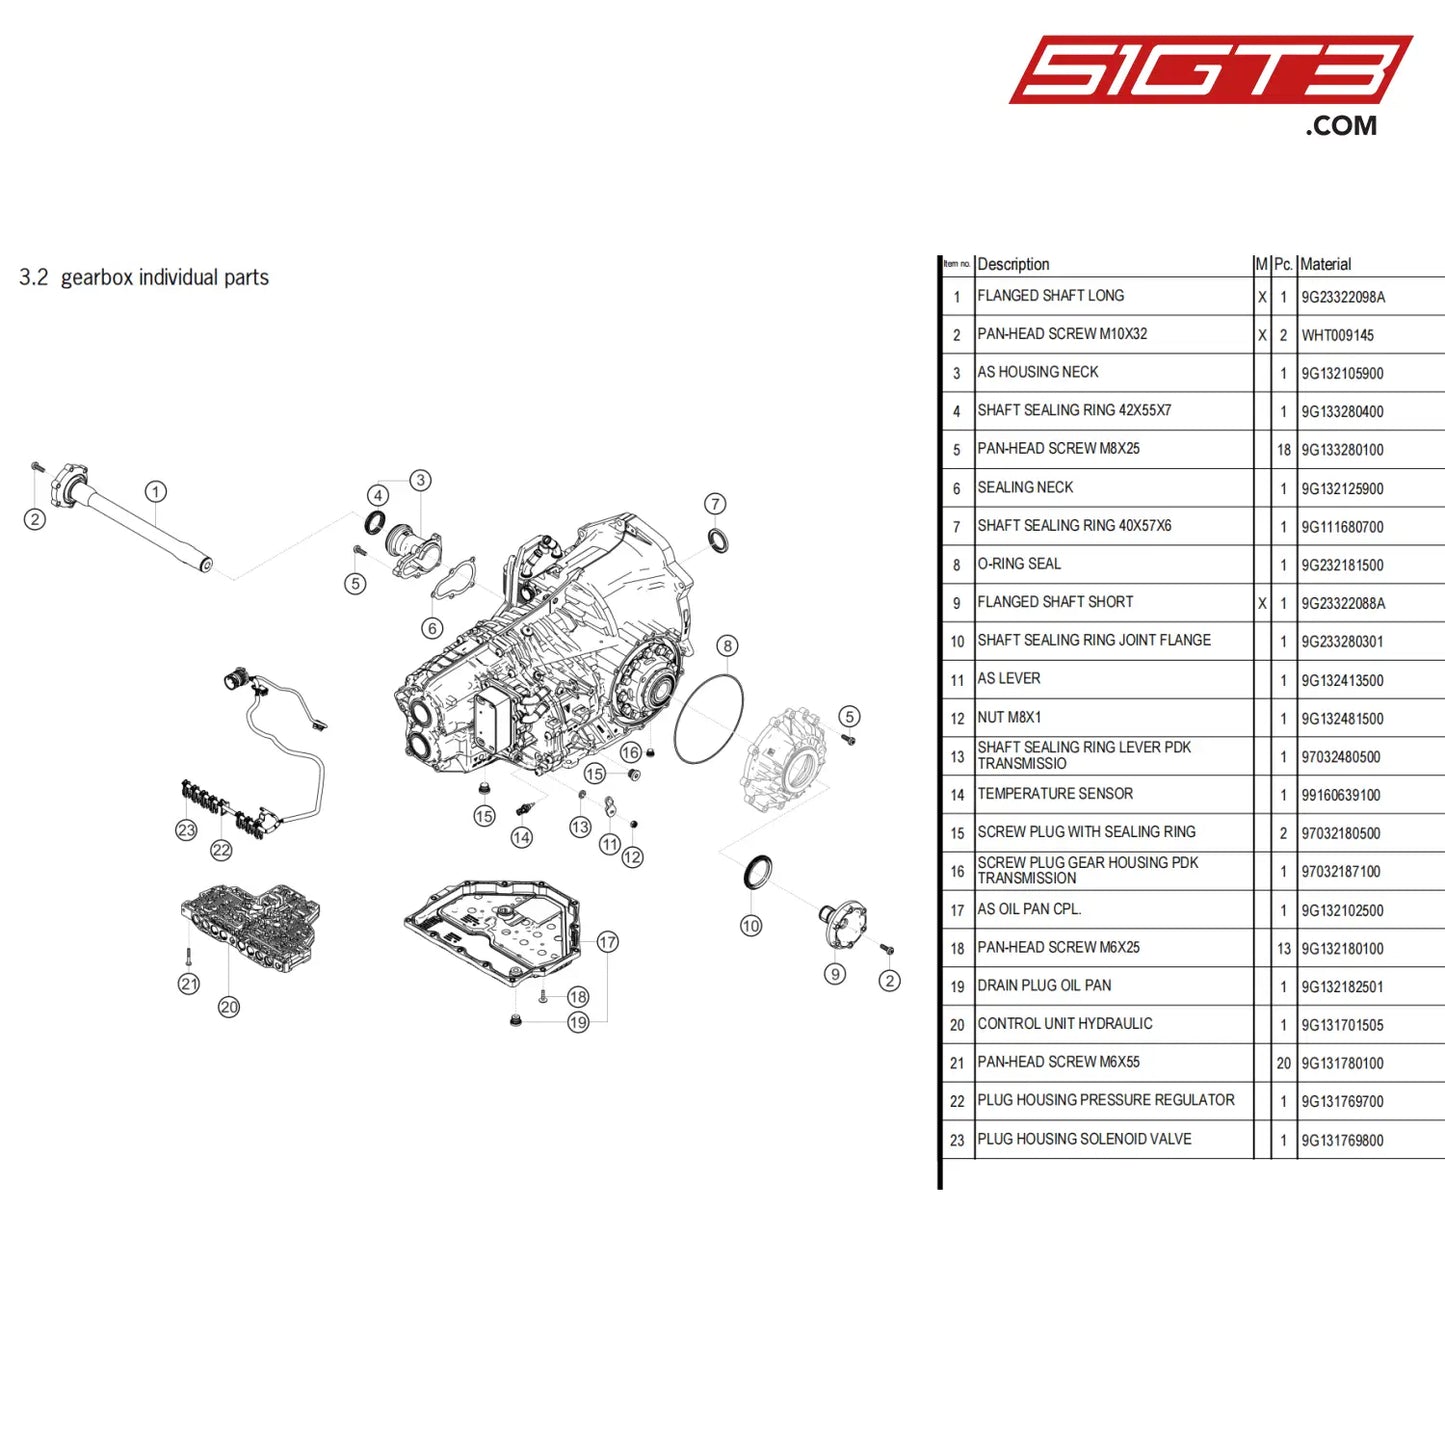 Temperature Sensor - 99160639100 [Porsche 718 Cayman Gt4 Clubsport] Gearbox Individual Parts